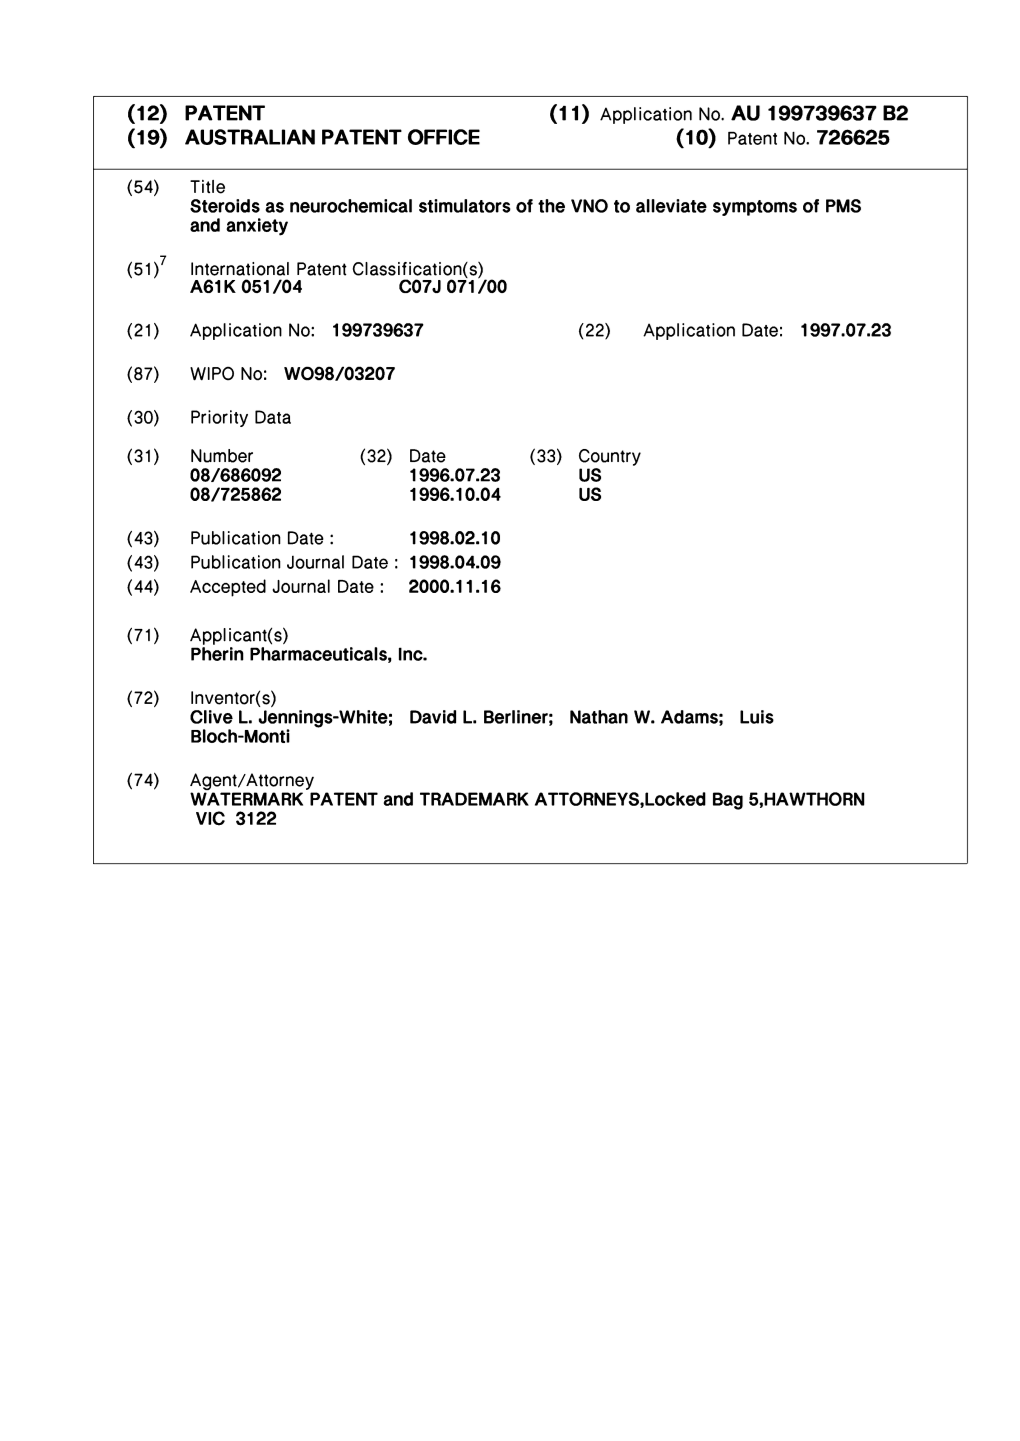 (11) Application No. AU 199739637 B2 (19) AUSTRALIAN PATENT OFFICE (10) Patent No